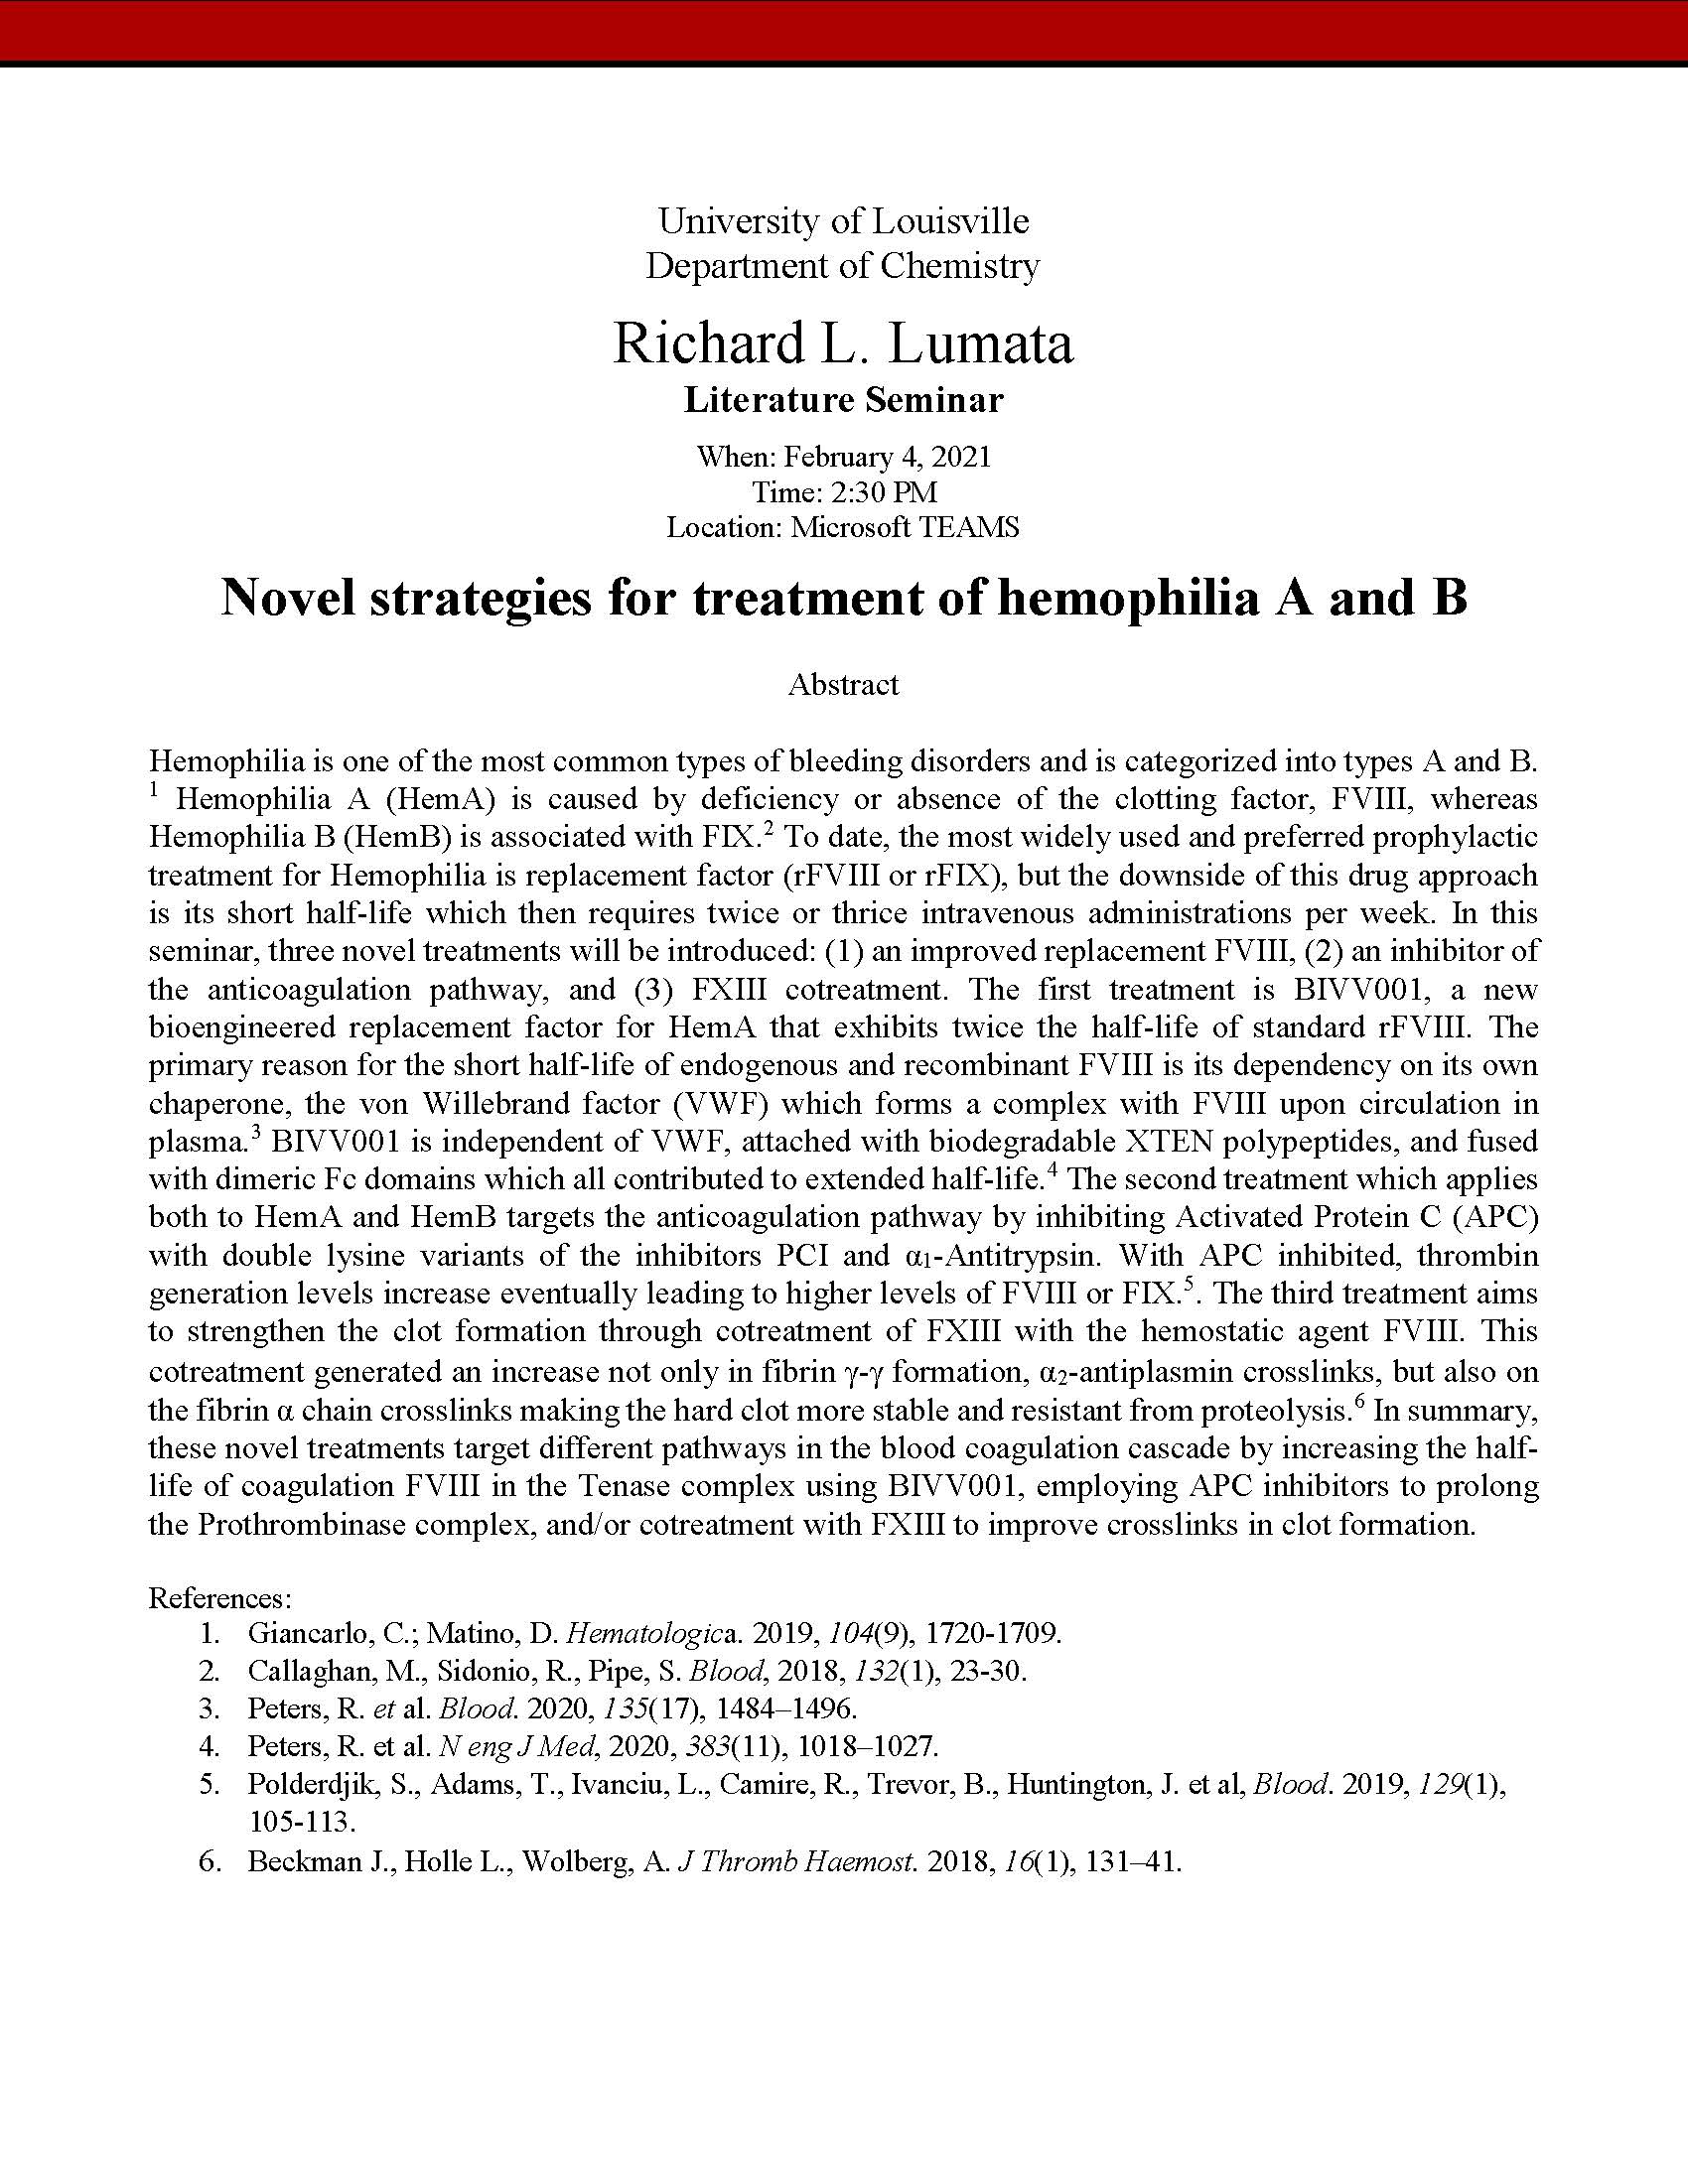 Novel strategies for treatment of hemophilia A and B